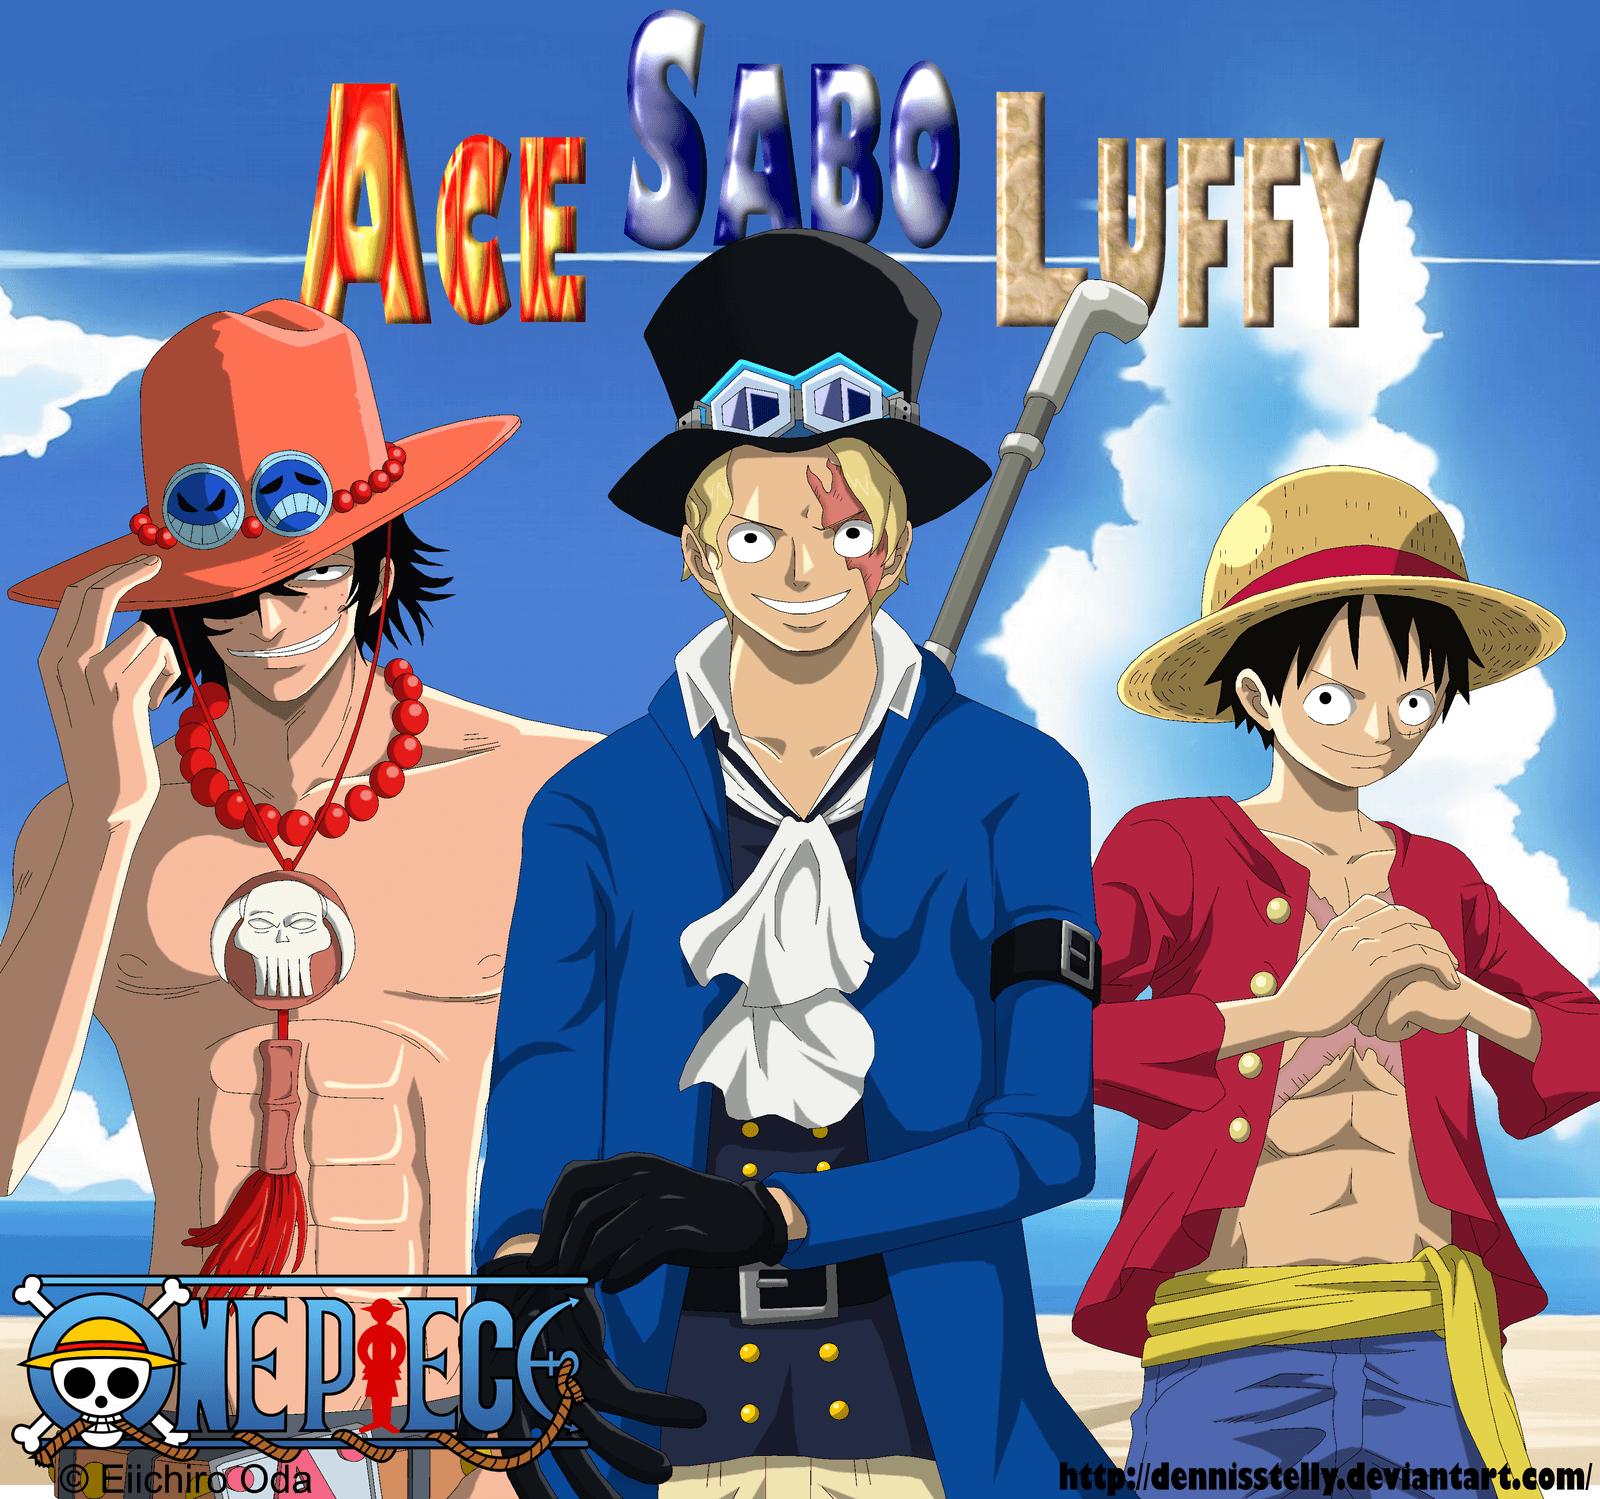 Ace, Sabo et Luffy wallpaper HD